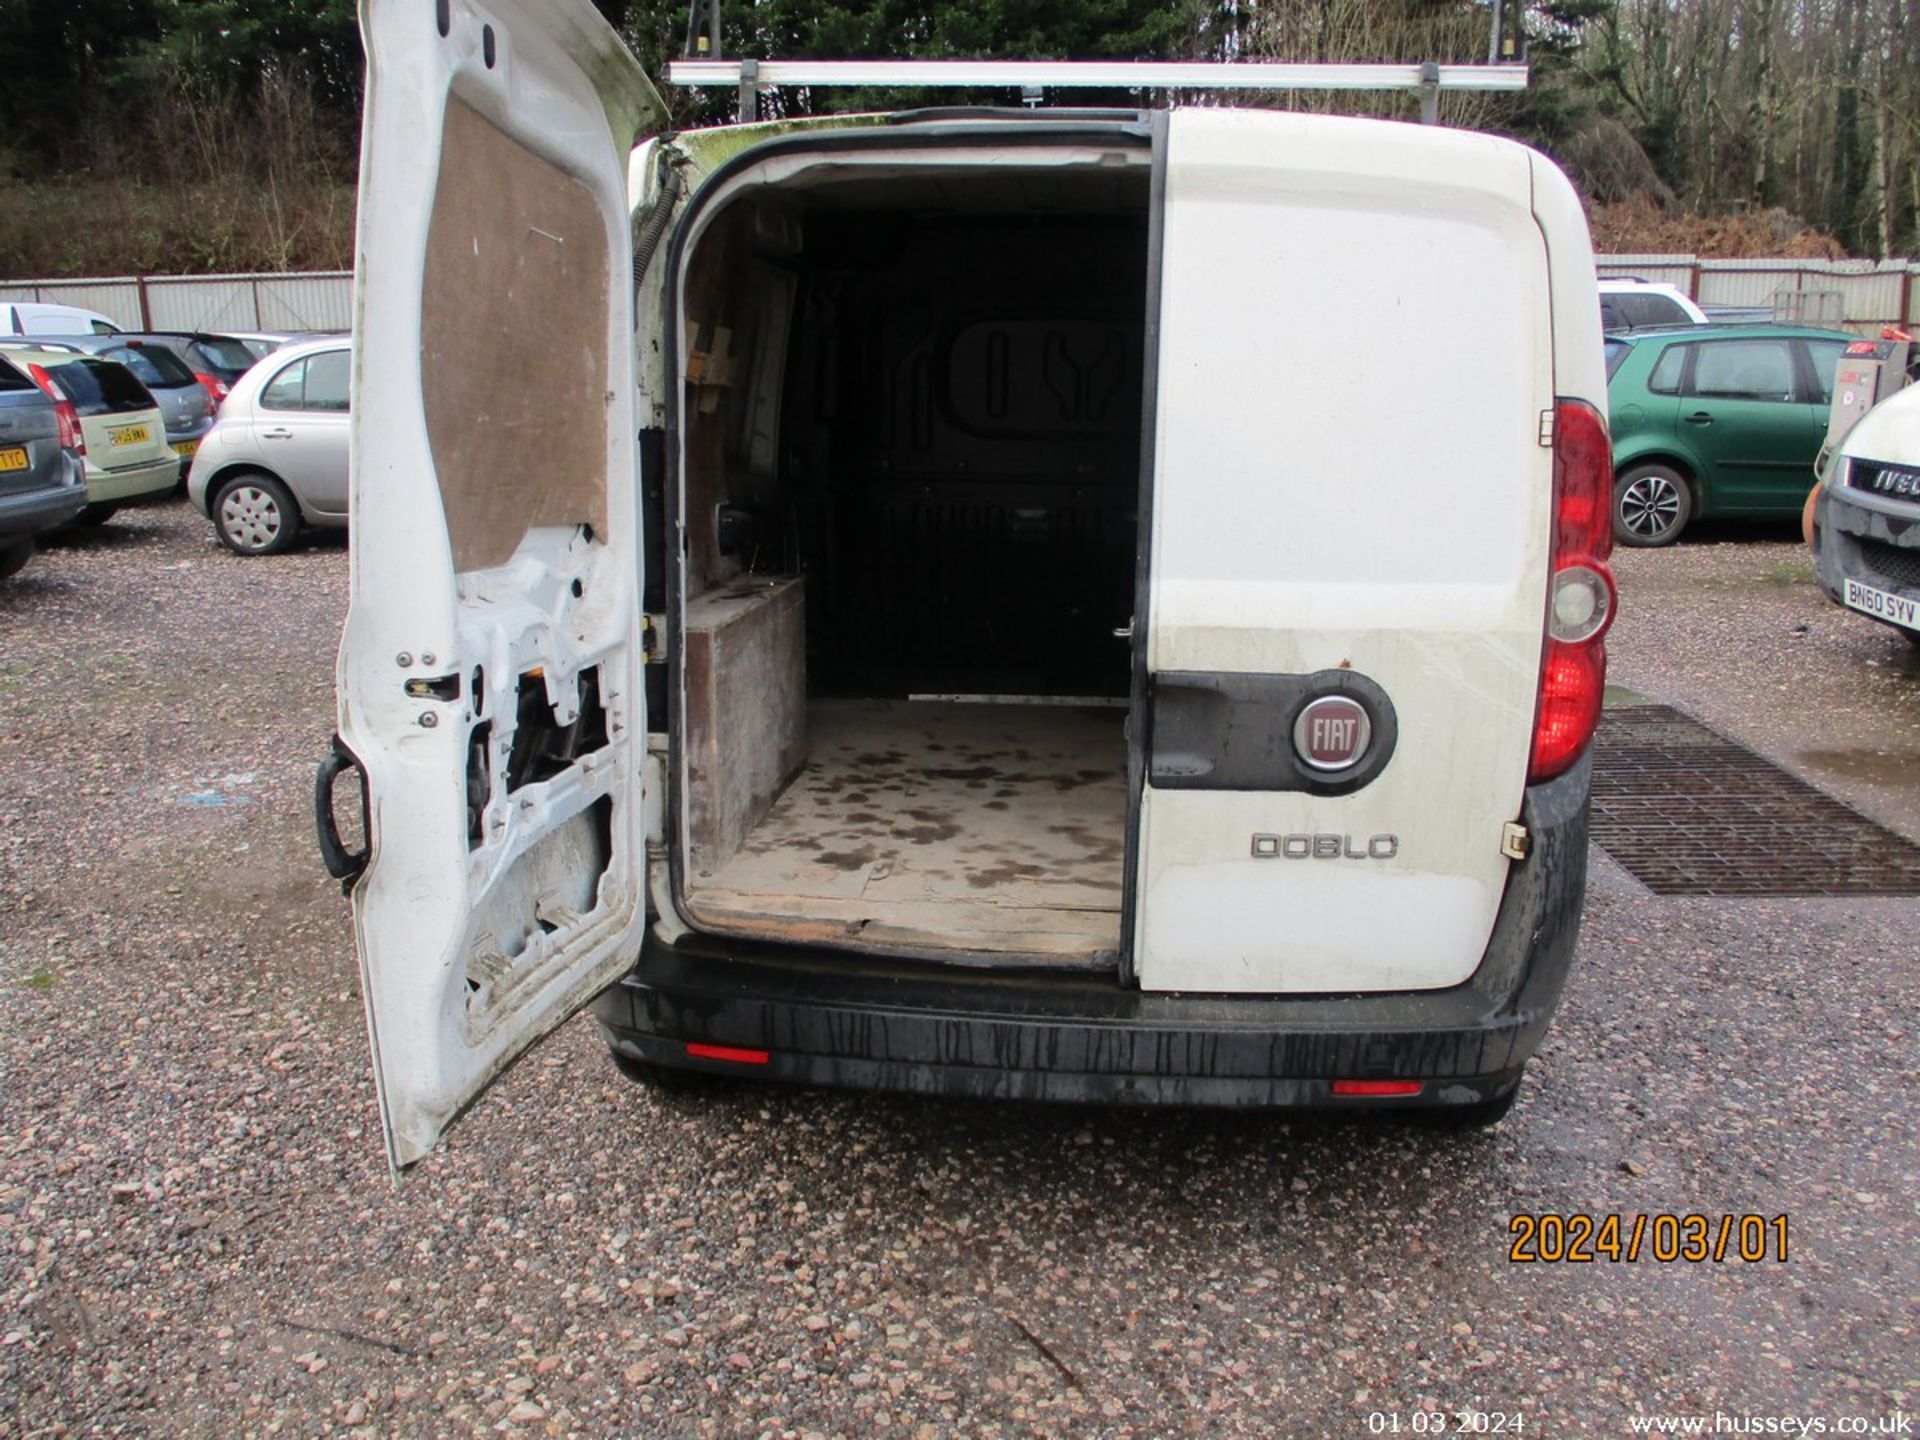 14/14 FIAT DOBLO 16V MULTIJET - 1248cc 5dr Van (White, 114k) - Image 14 of 18